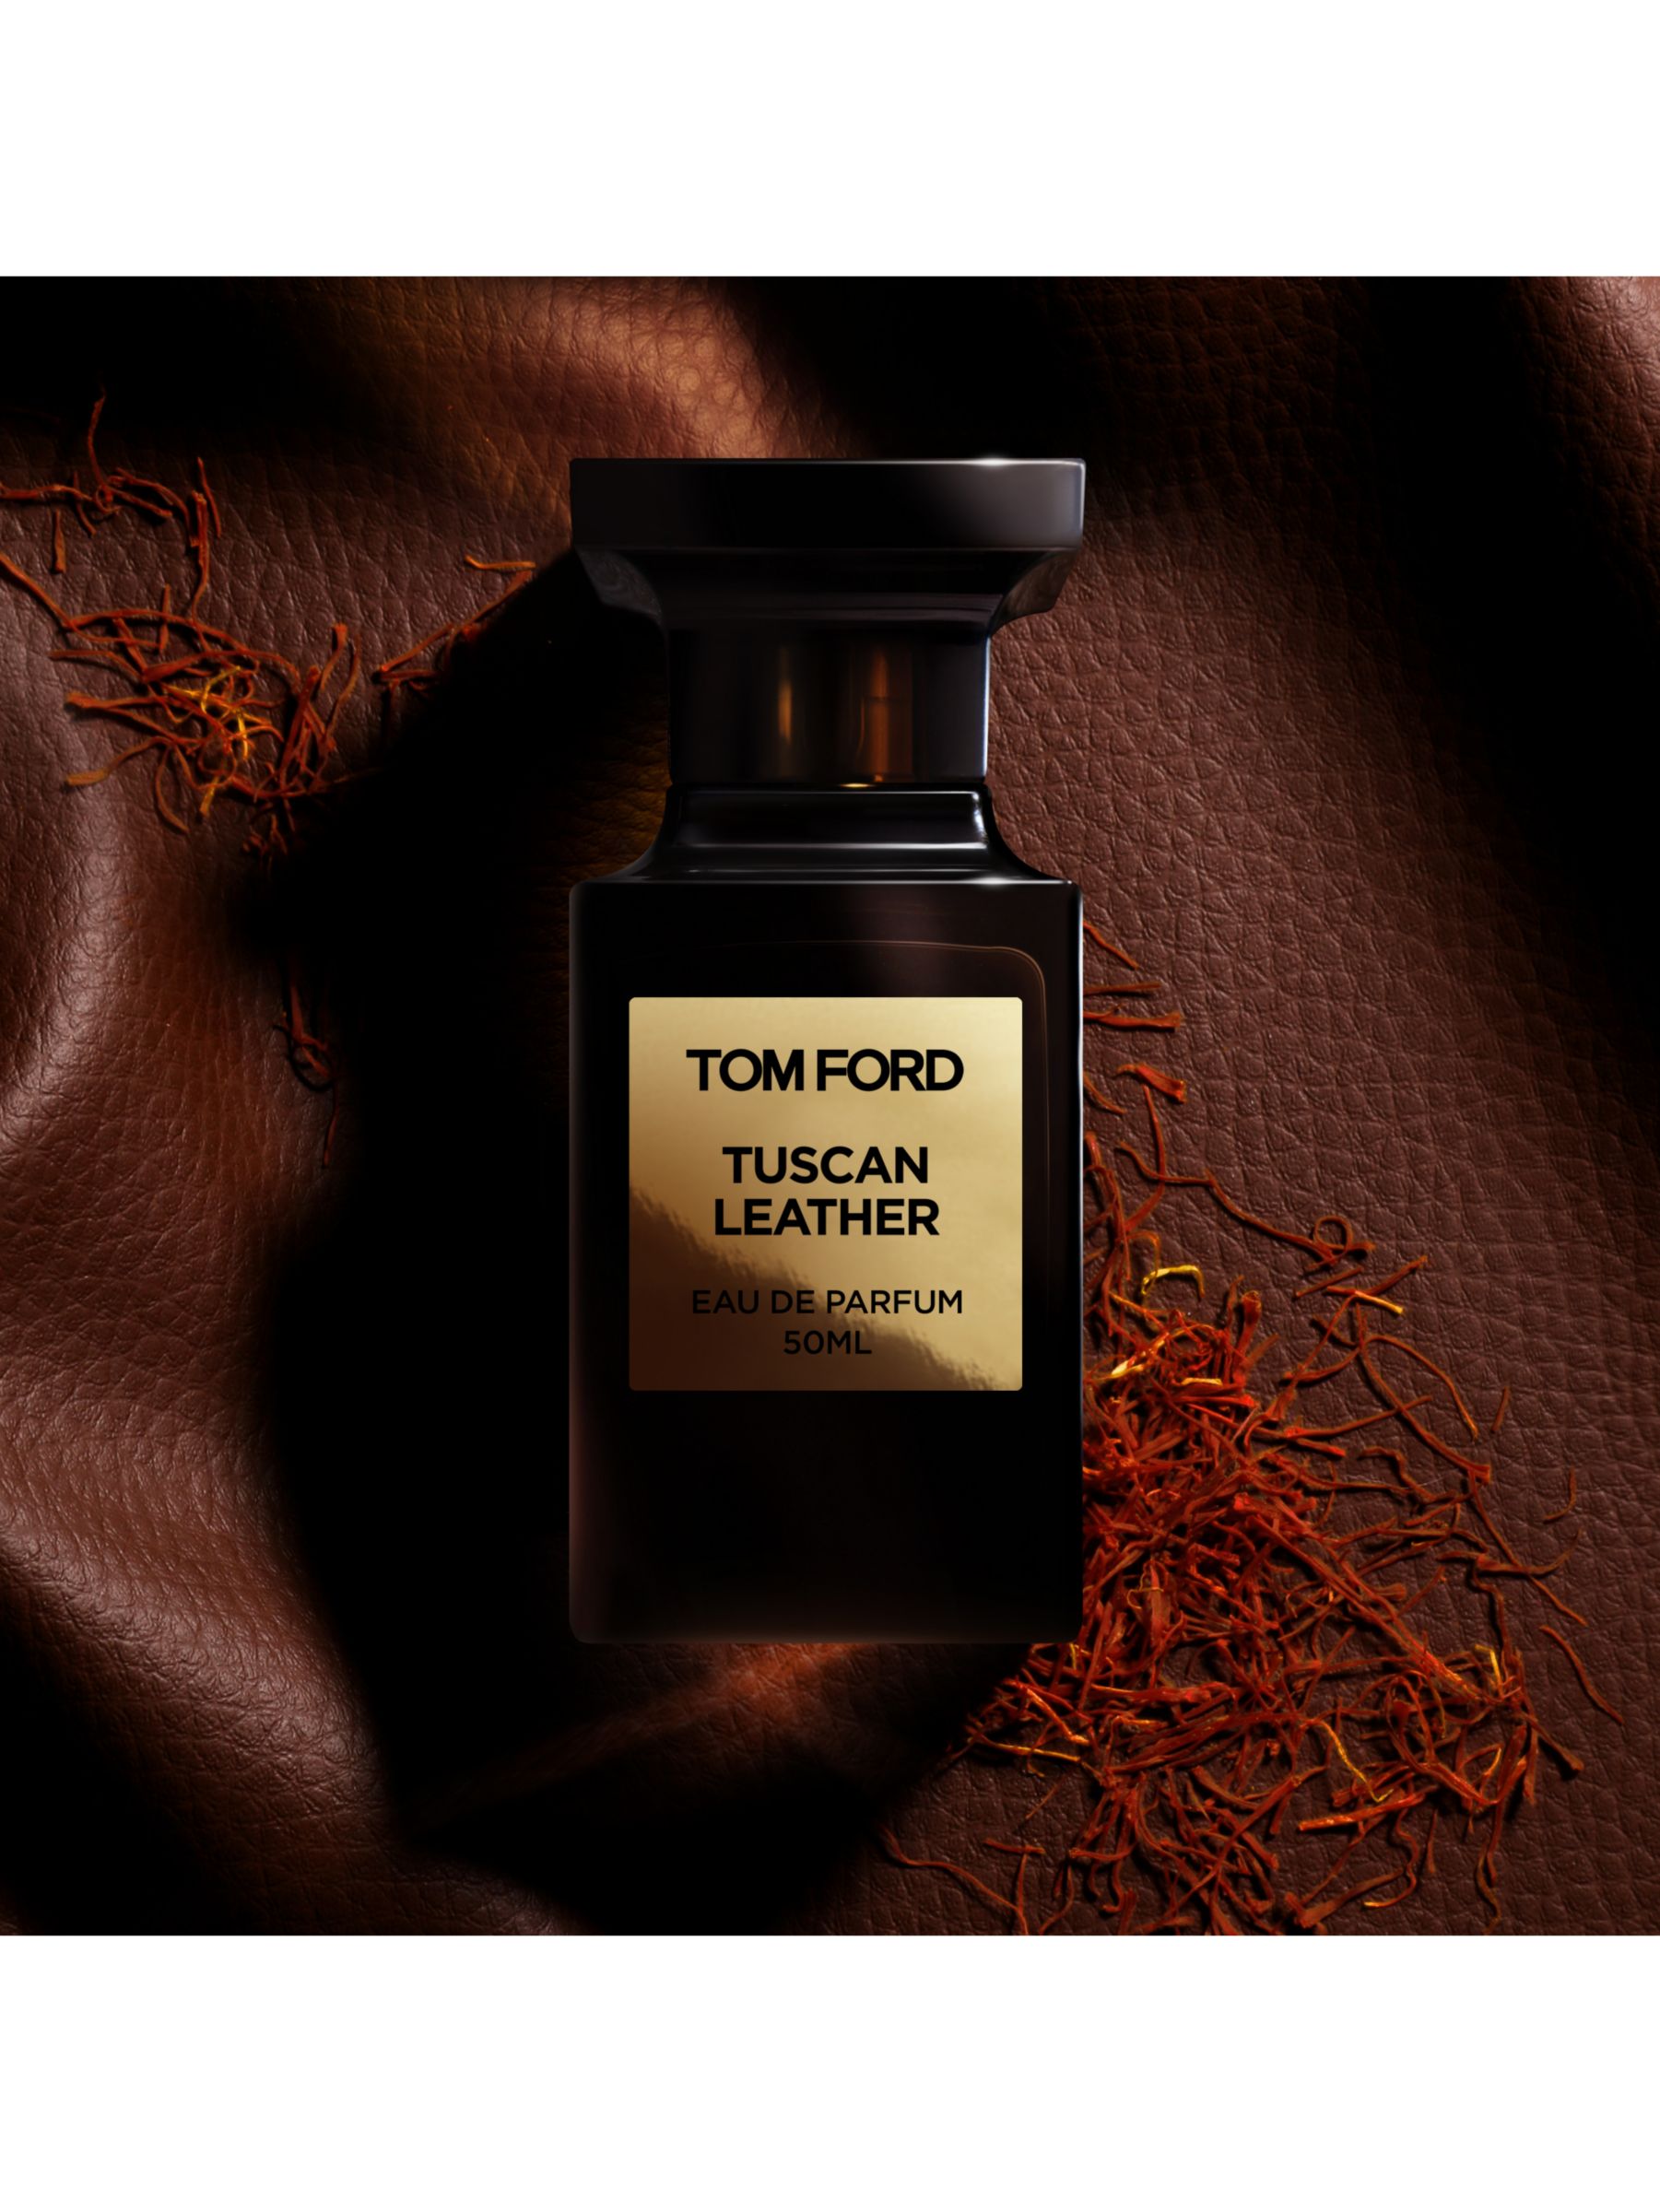 TOM FORD Private Blend Tuscan Leather Eau de Parfum, 50ml at John Lewis ...